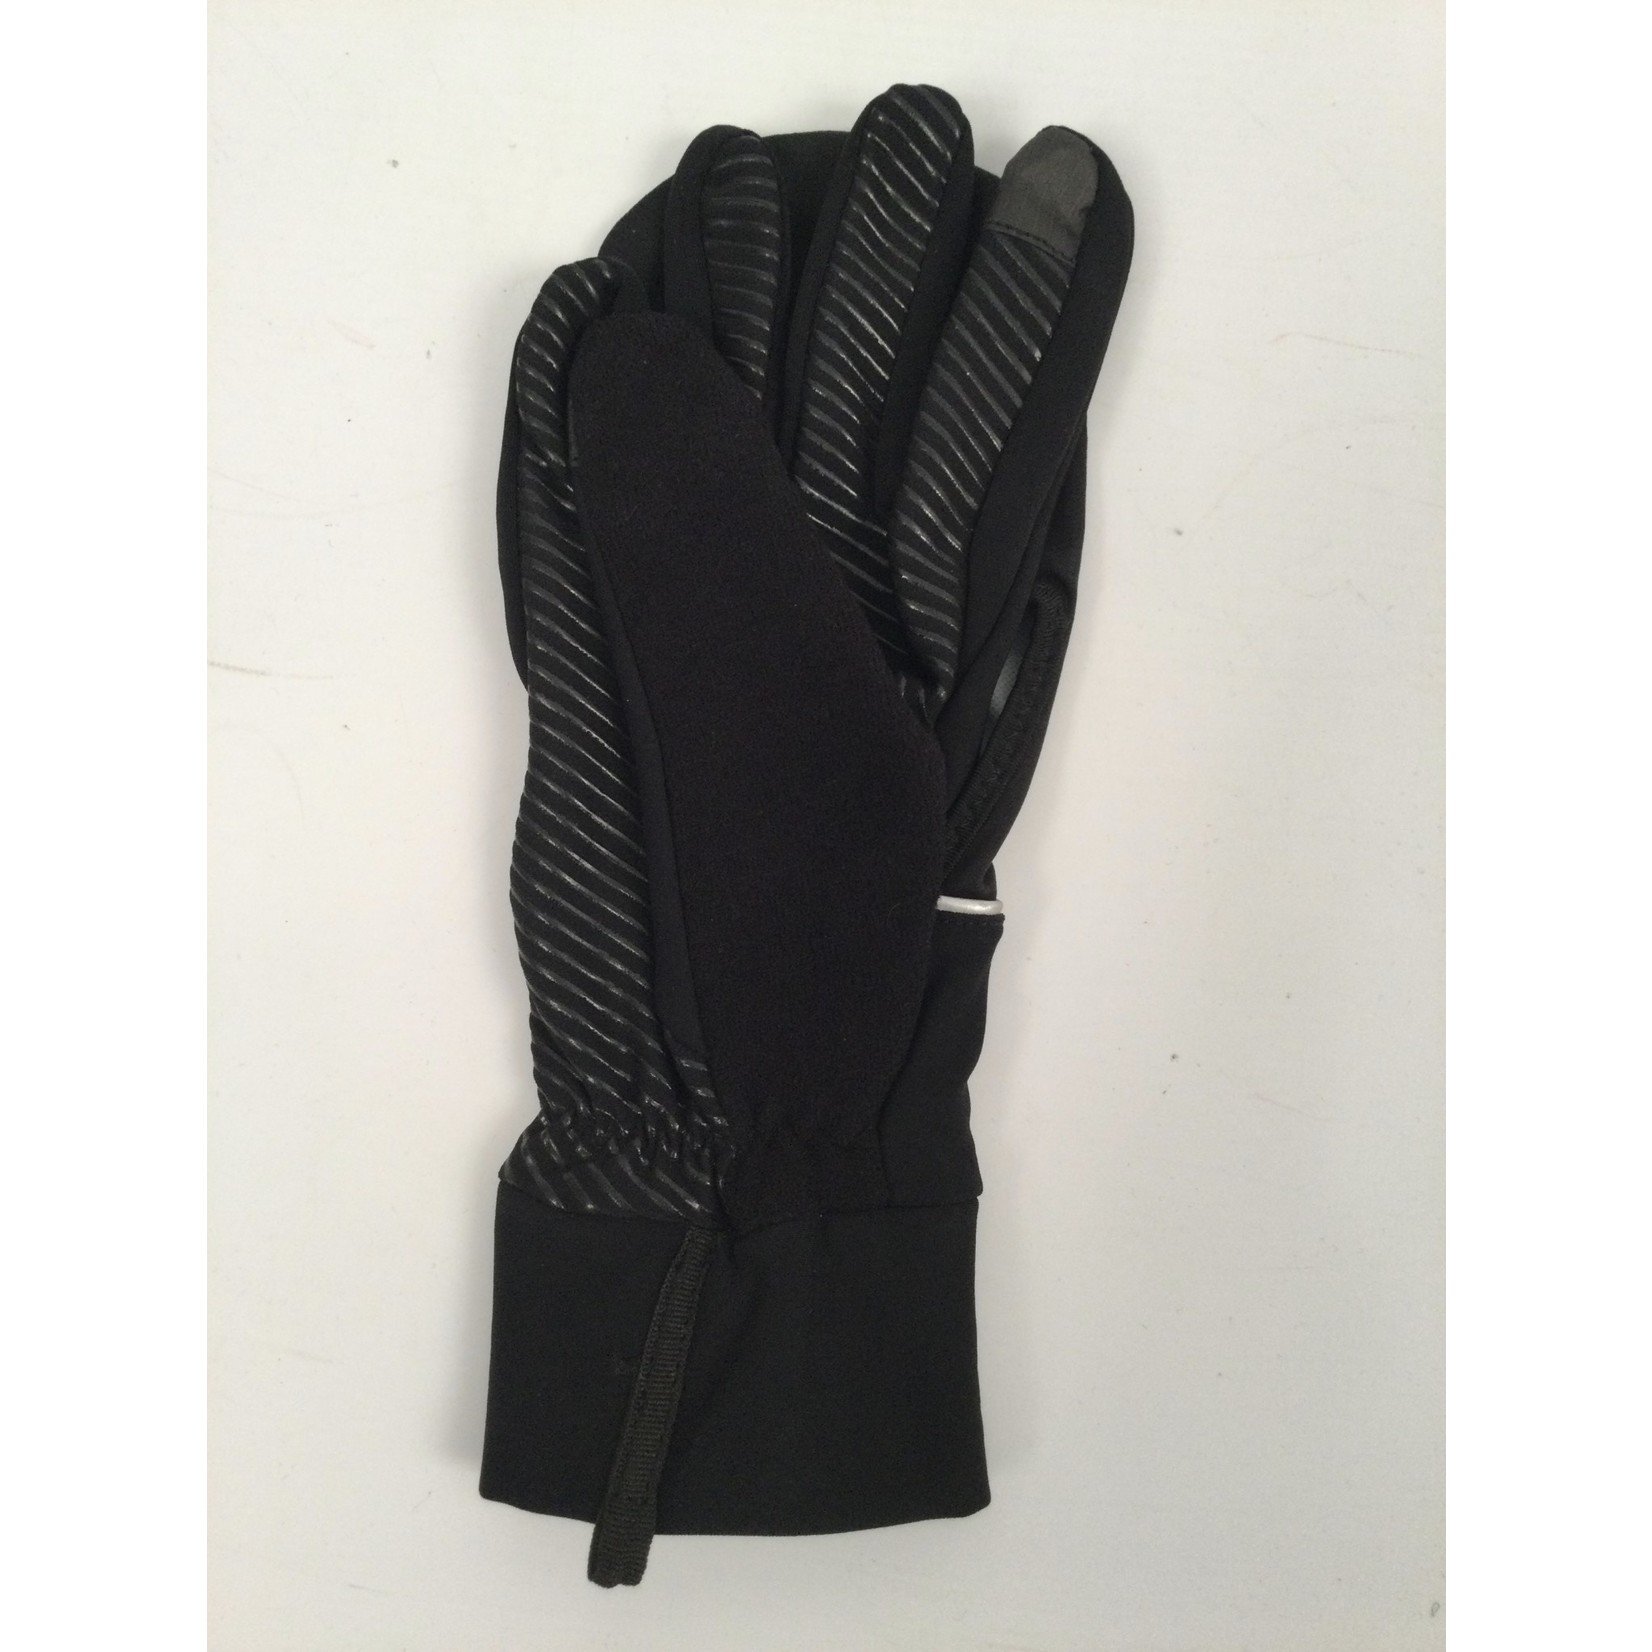 Gist Guanto C/Cover Gloves Black 5837